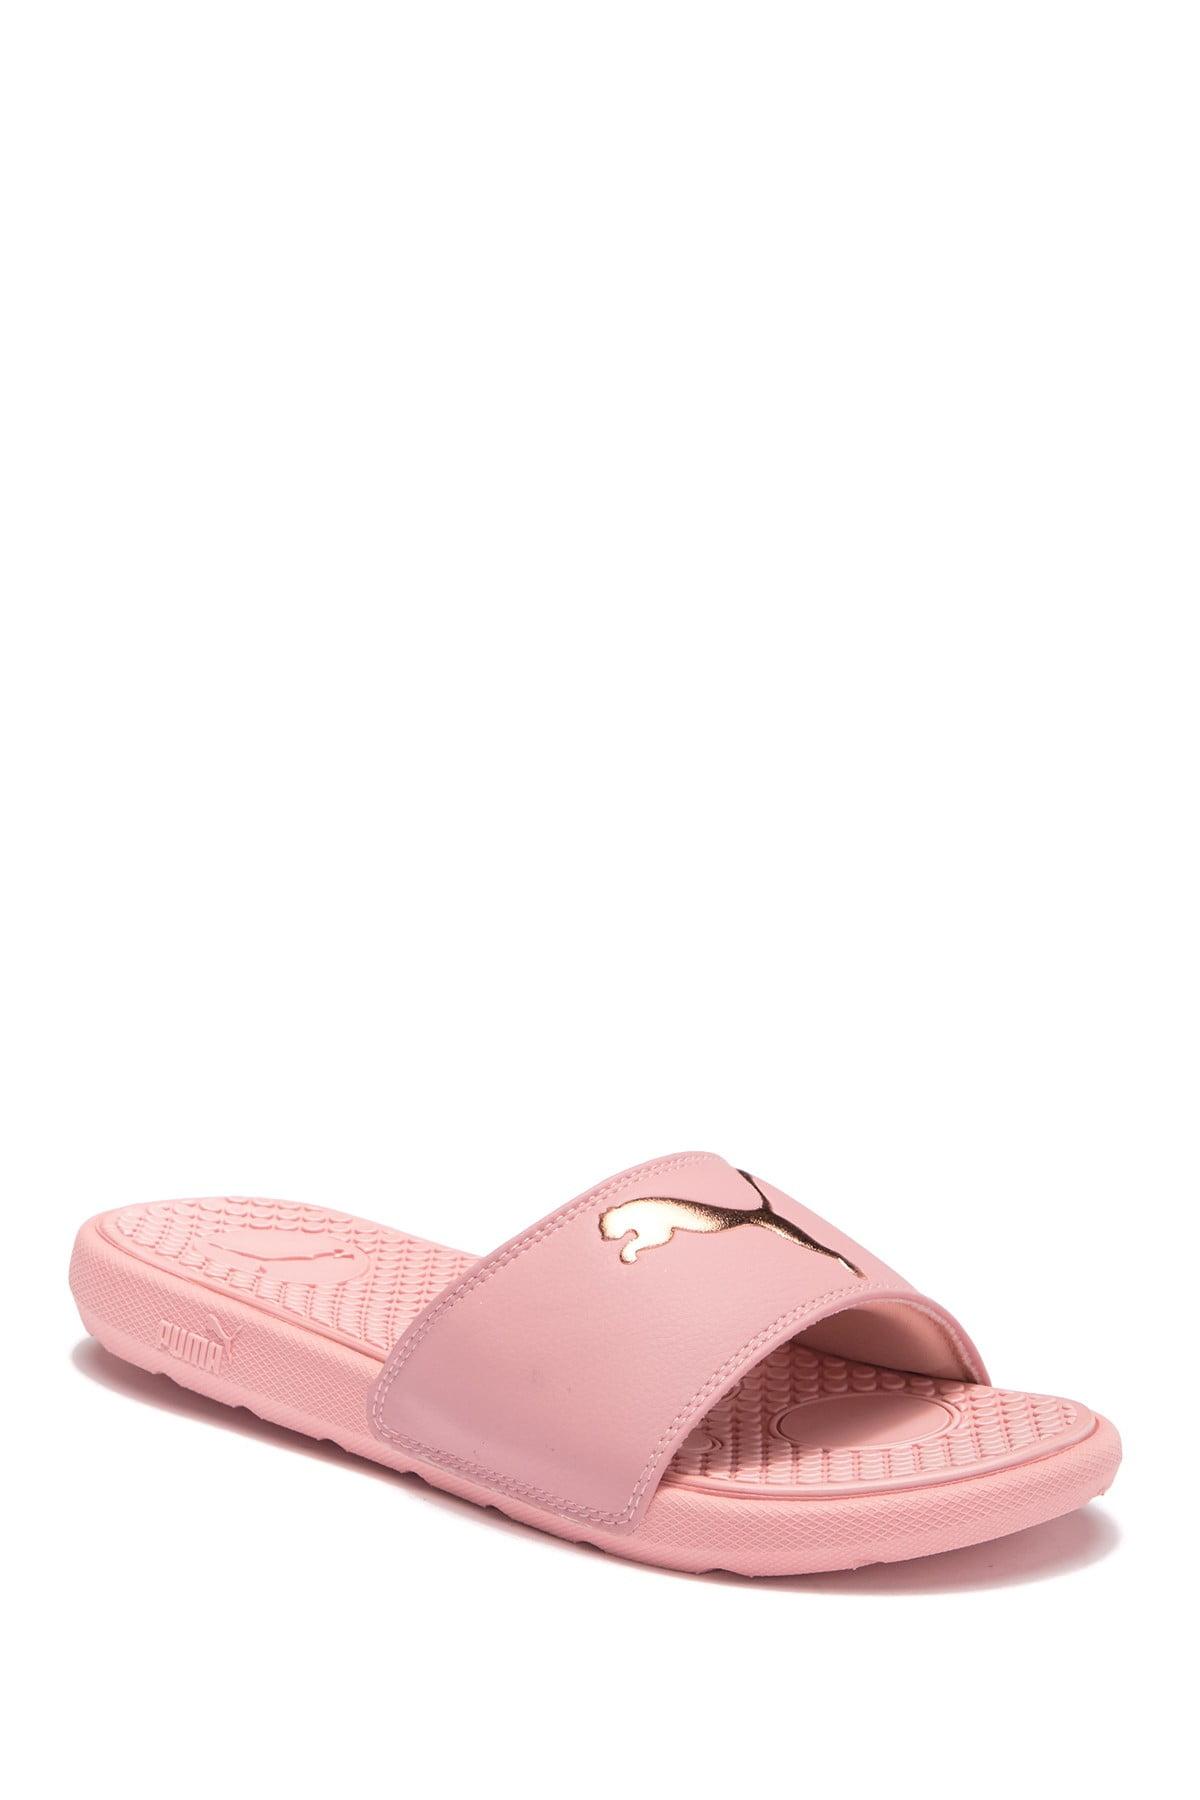 PUMA Cool Cat Slide Sandal in Pink | Lyst